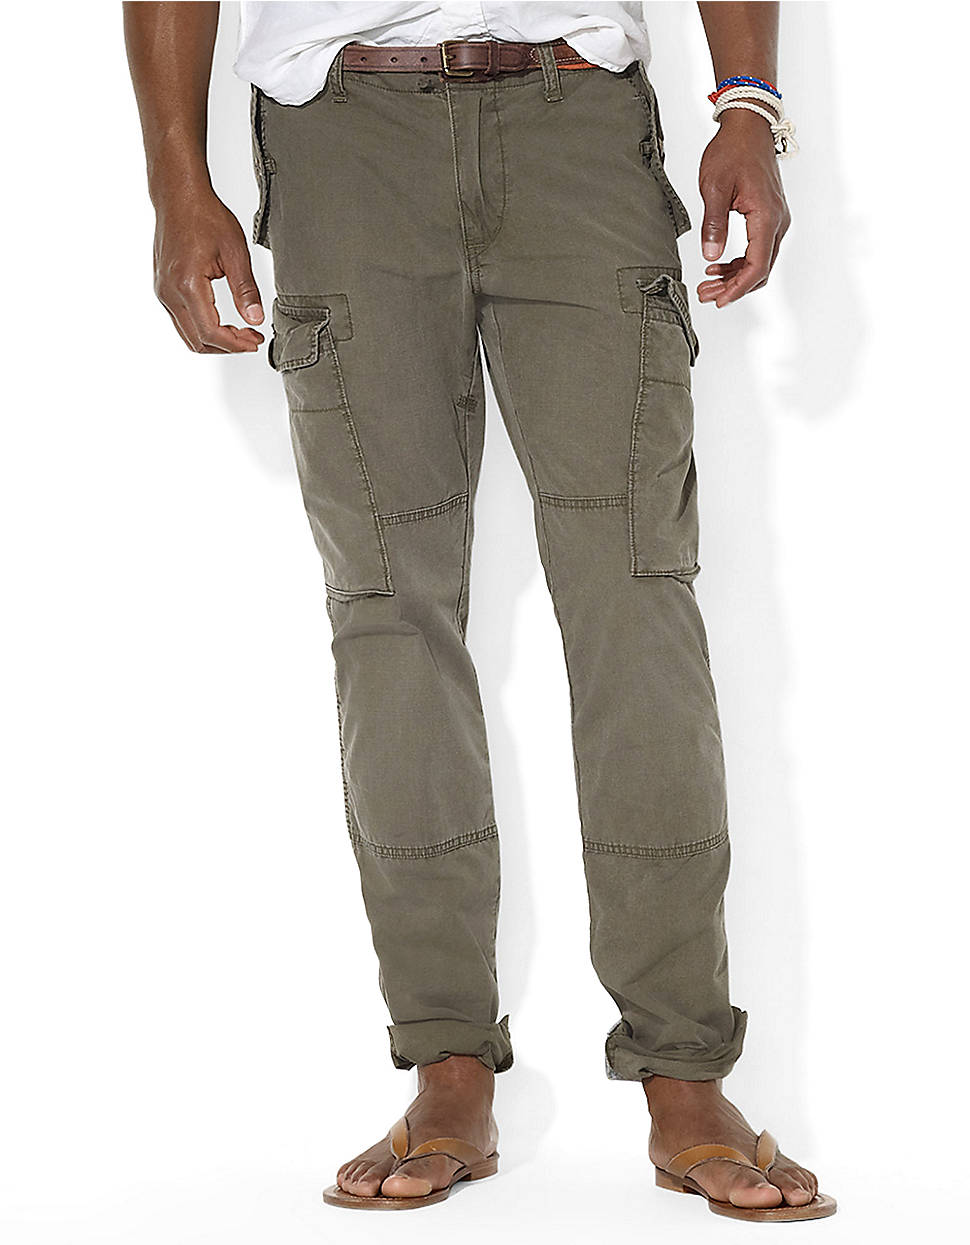 Lyst - Polo Ralph Lauren Canadian Slub Poplin Cargo Pants in Gray for Men